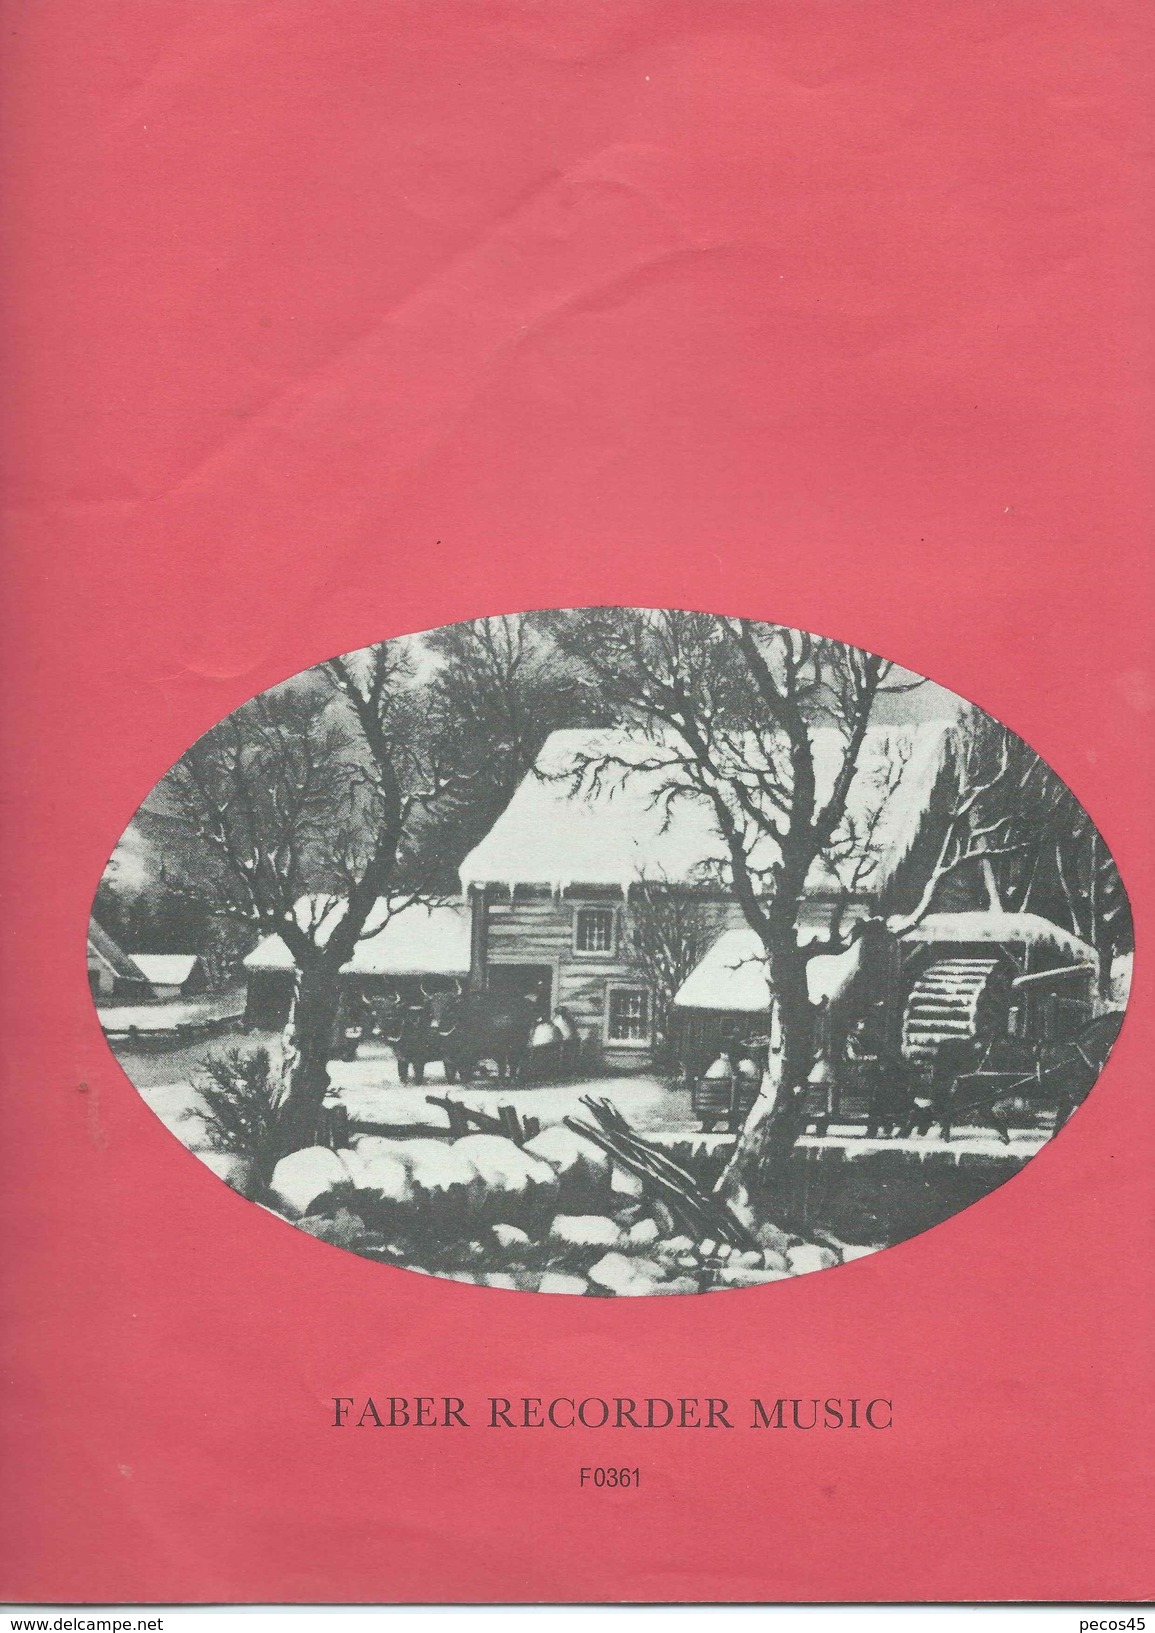 Partition : "JINGLE BELLS" 1968/69. - Folk Music